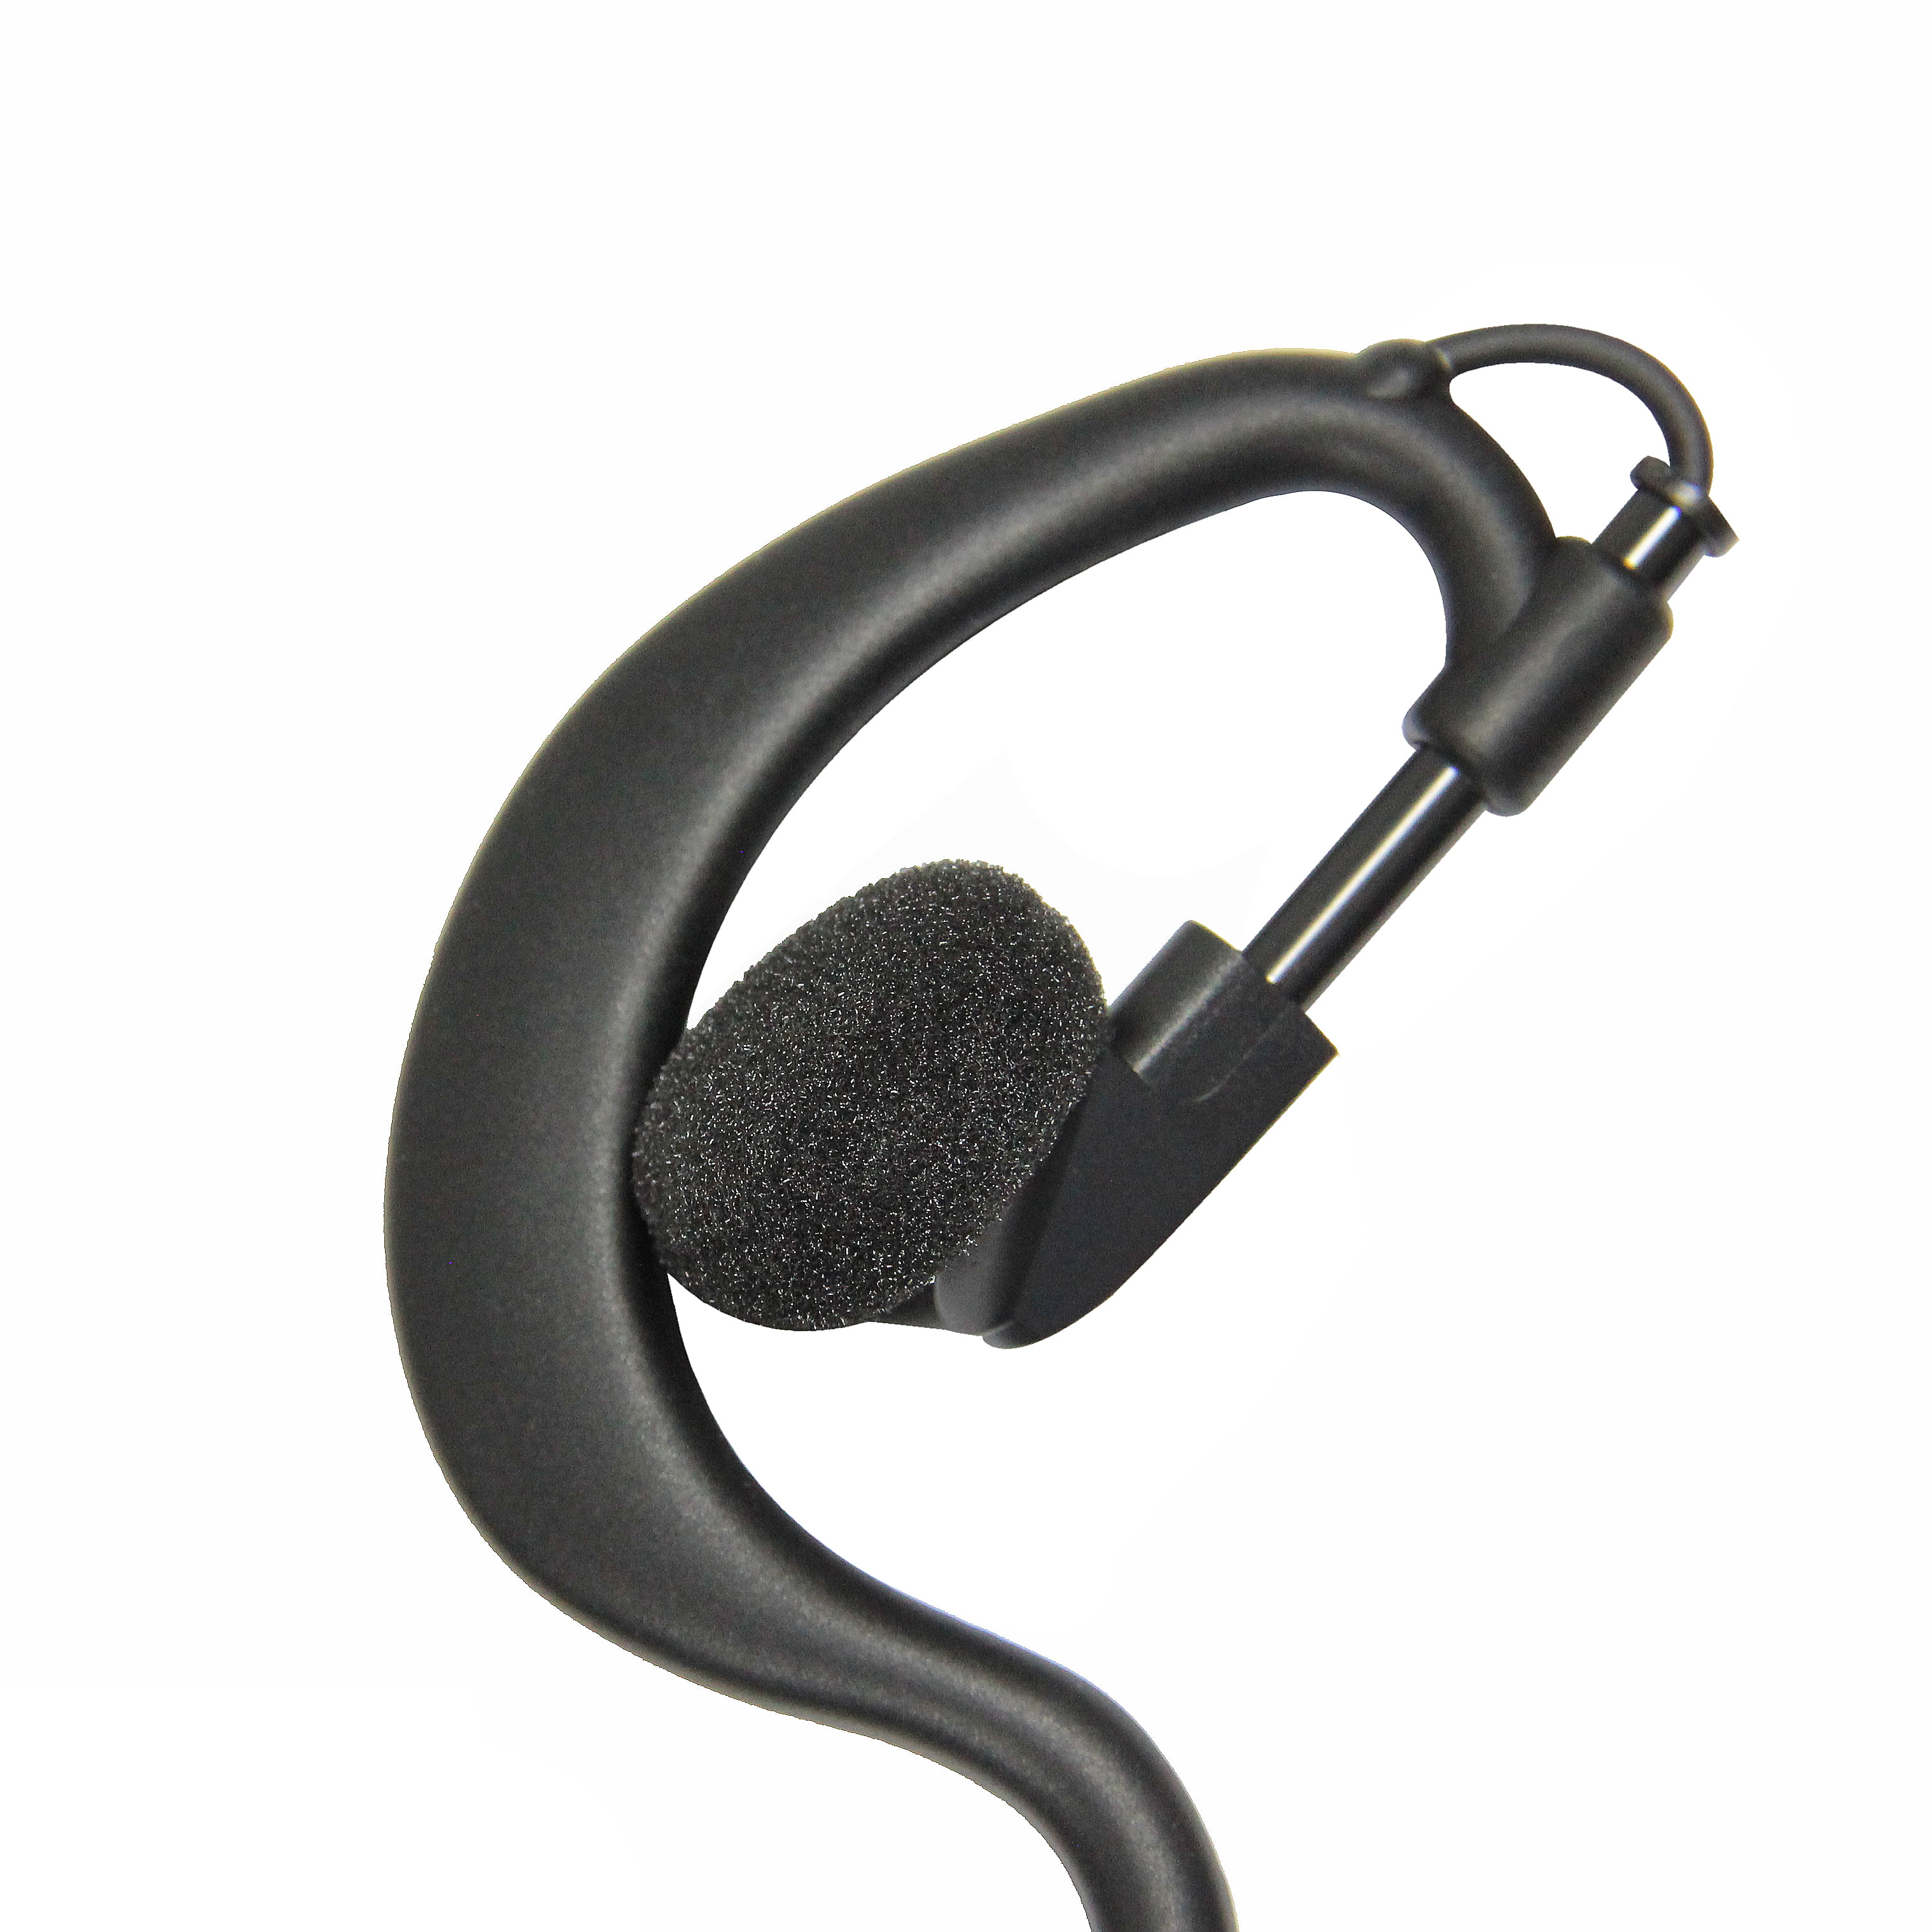 MaximalPower 2 Pin G Shape Earpiece Headset with PTT Mic for